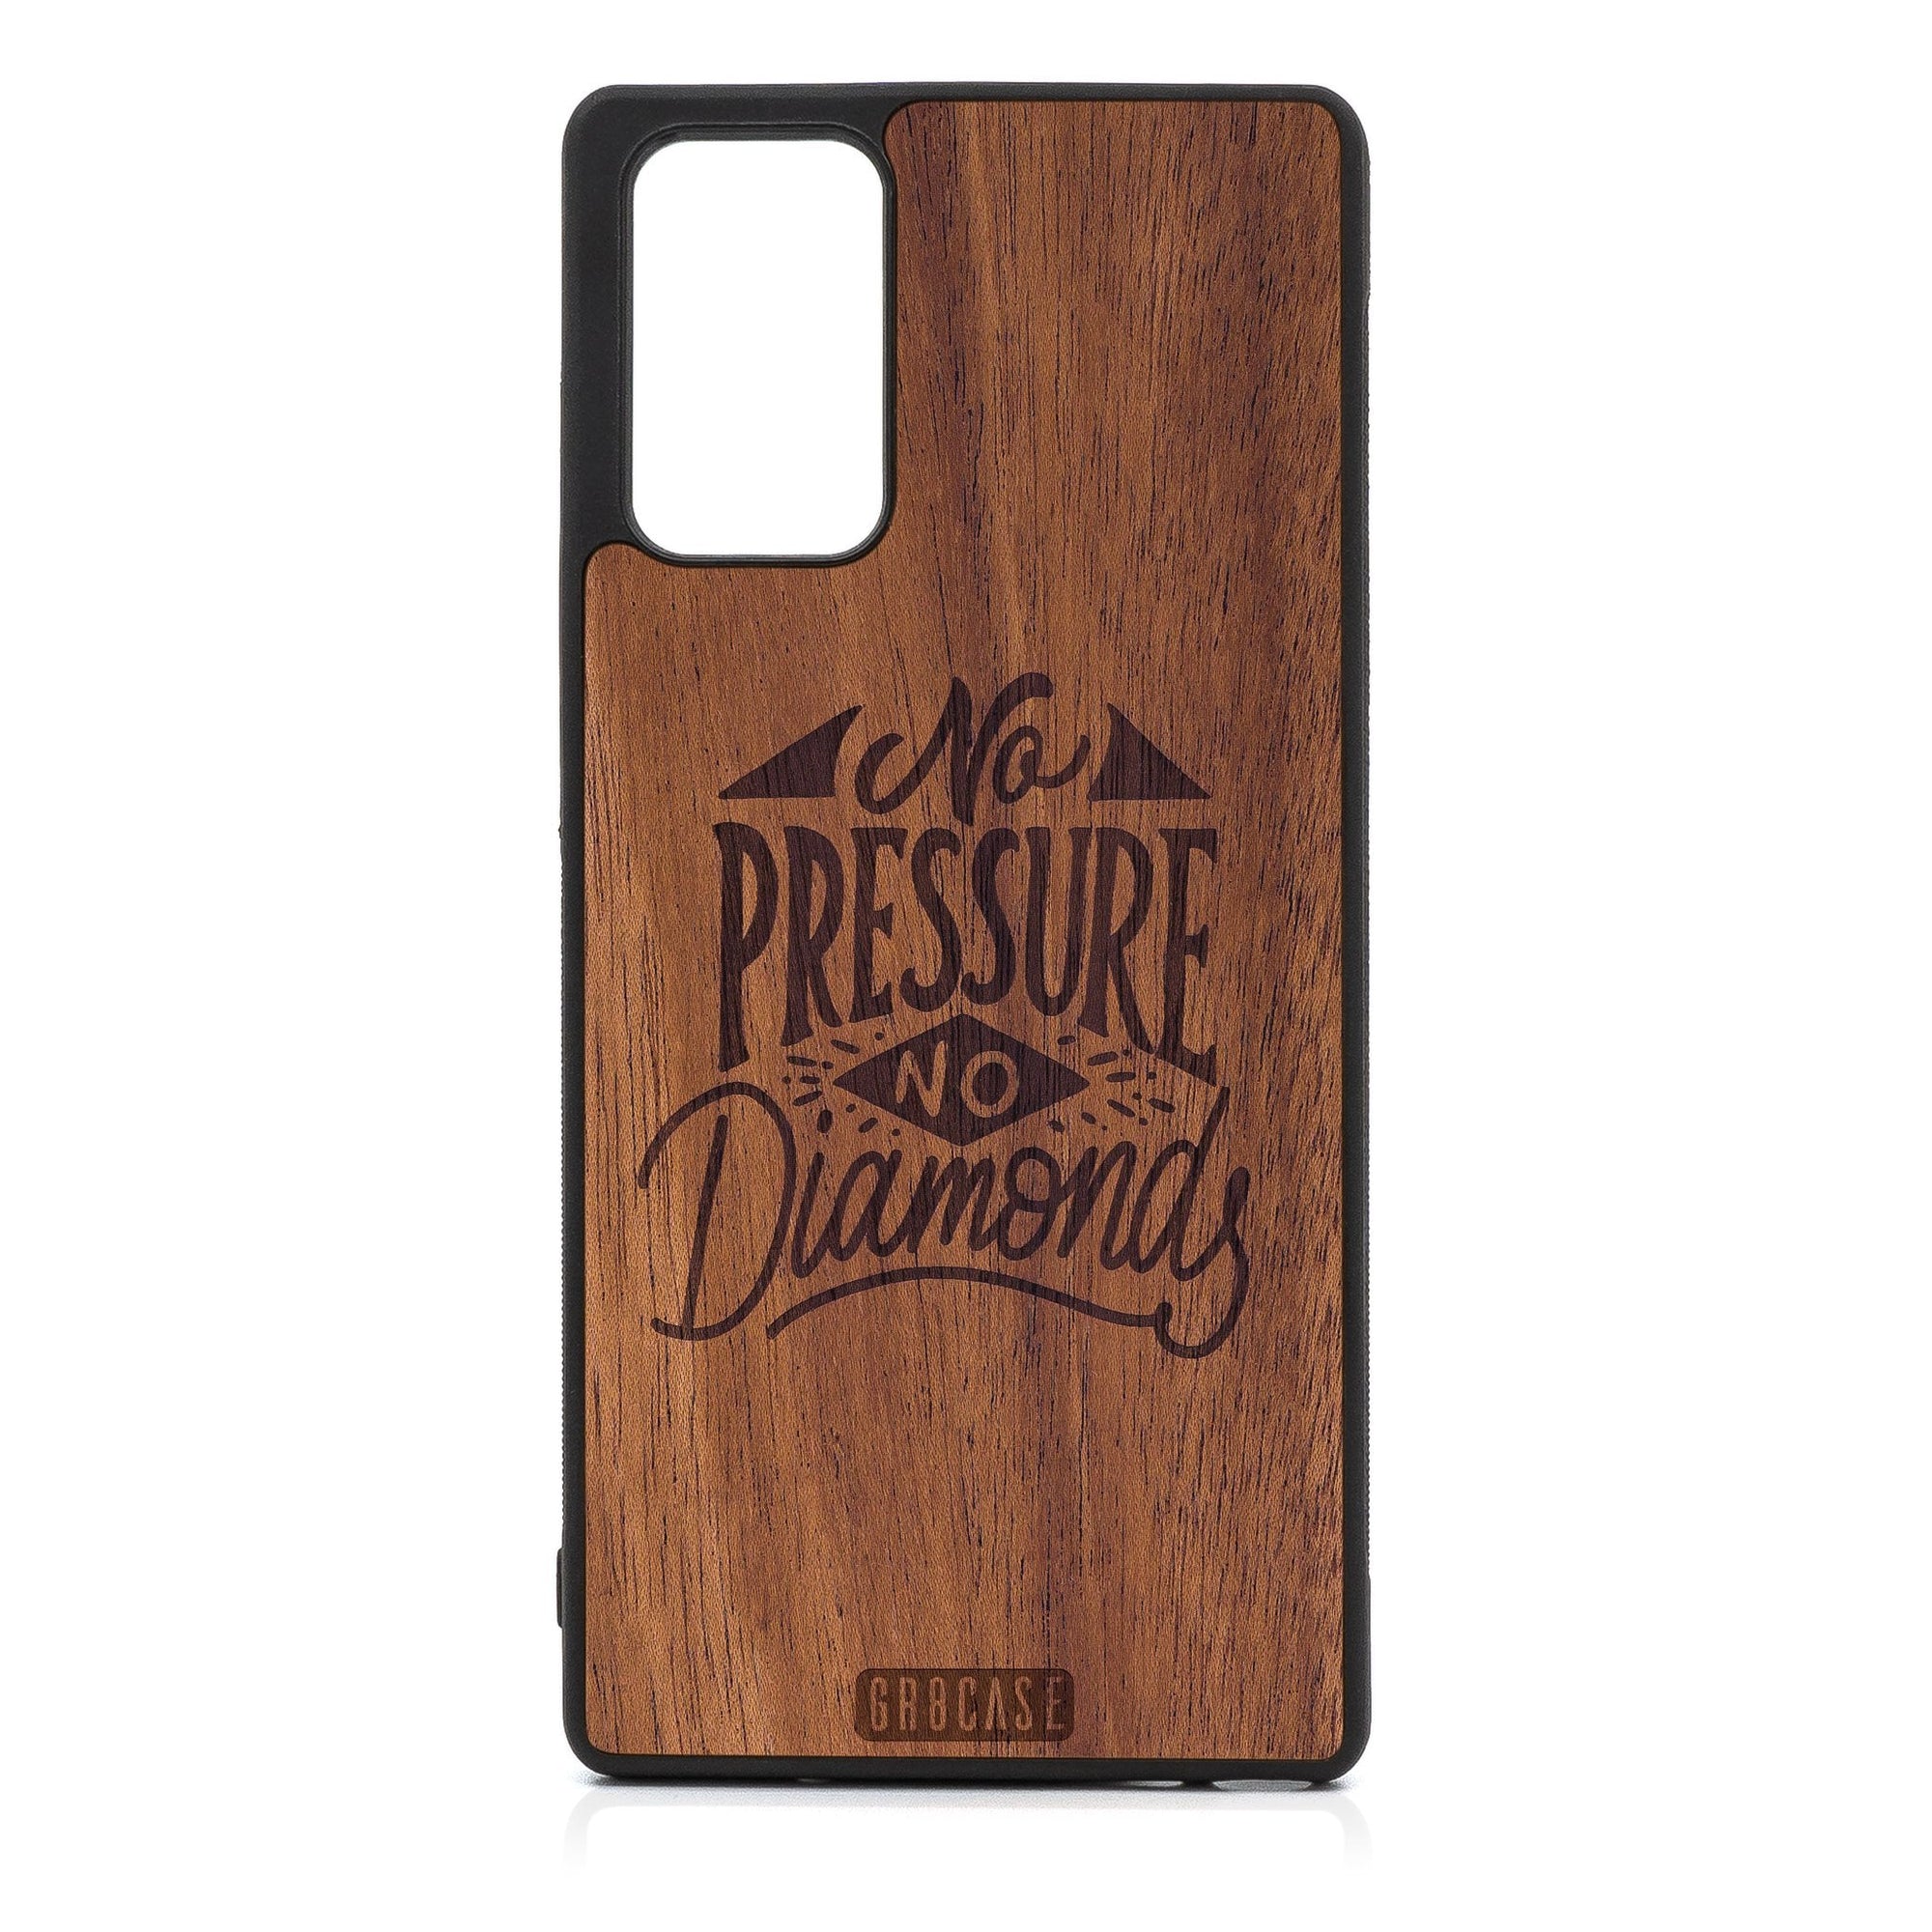 No Pressure No Diamonds Design Wood Case For Samsung Galaxy A52 5G